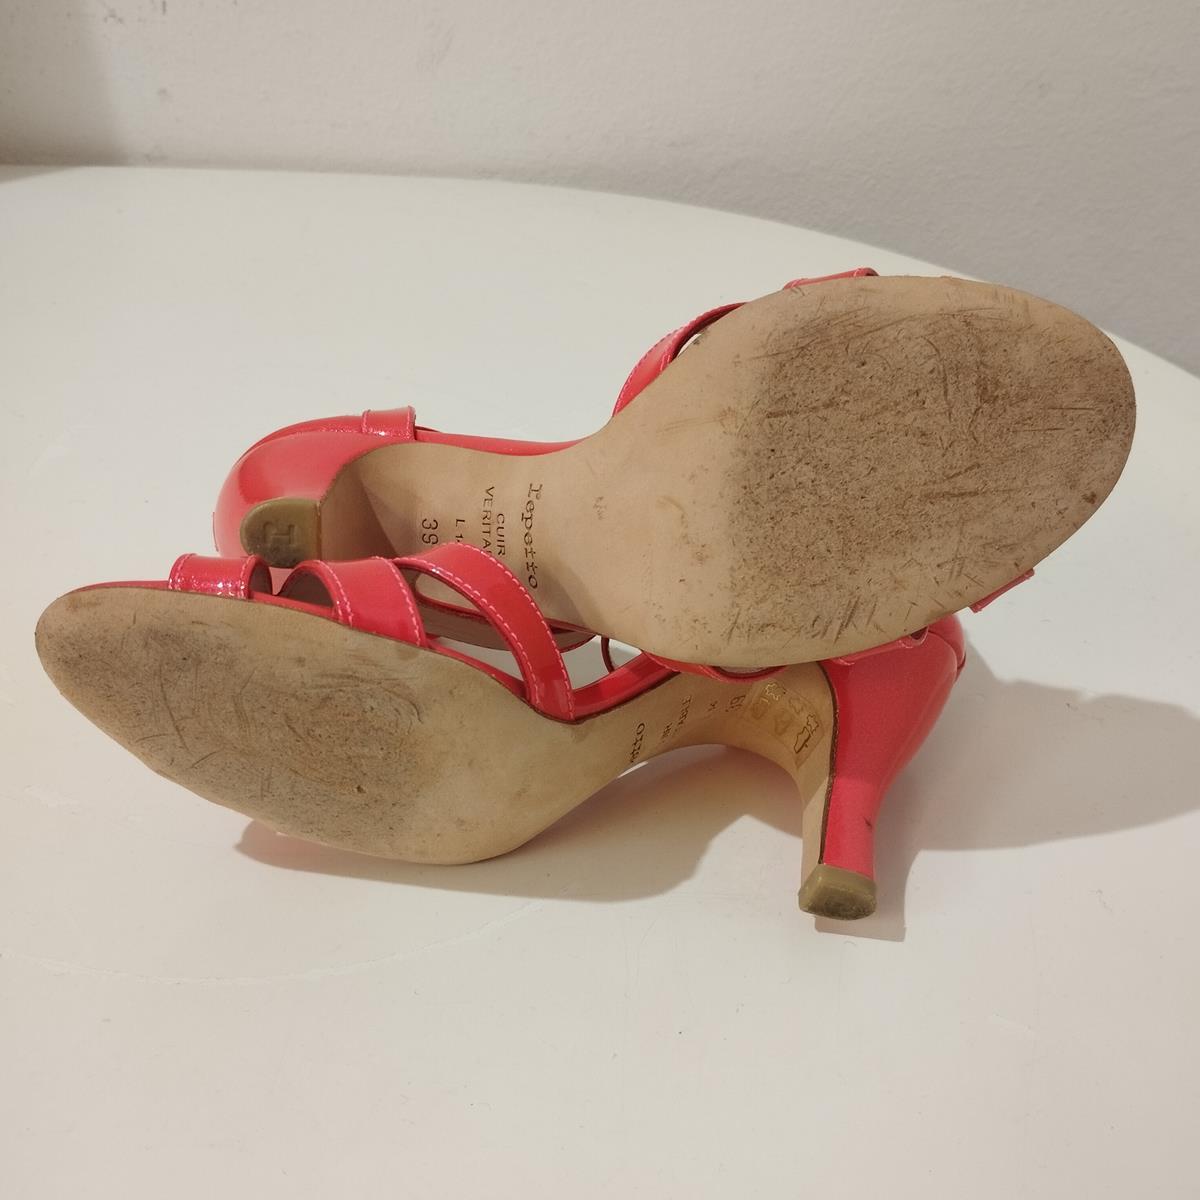 Repetto Paris Patent Leather Sandals IT 39 For Sale 3